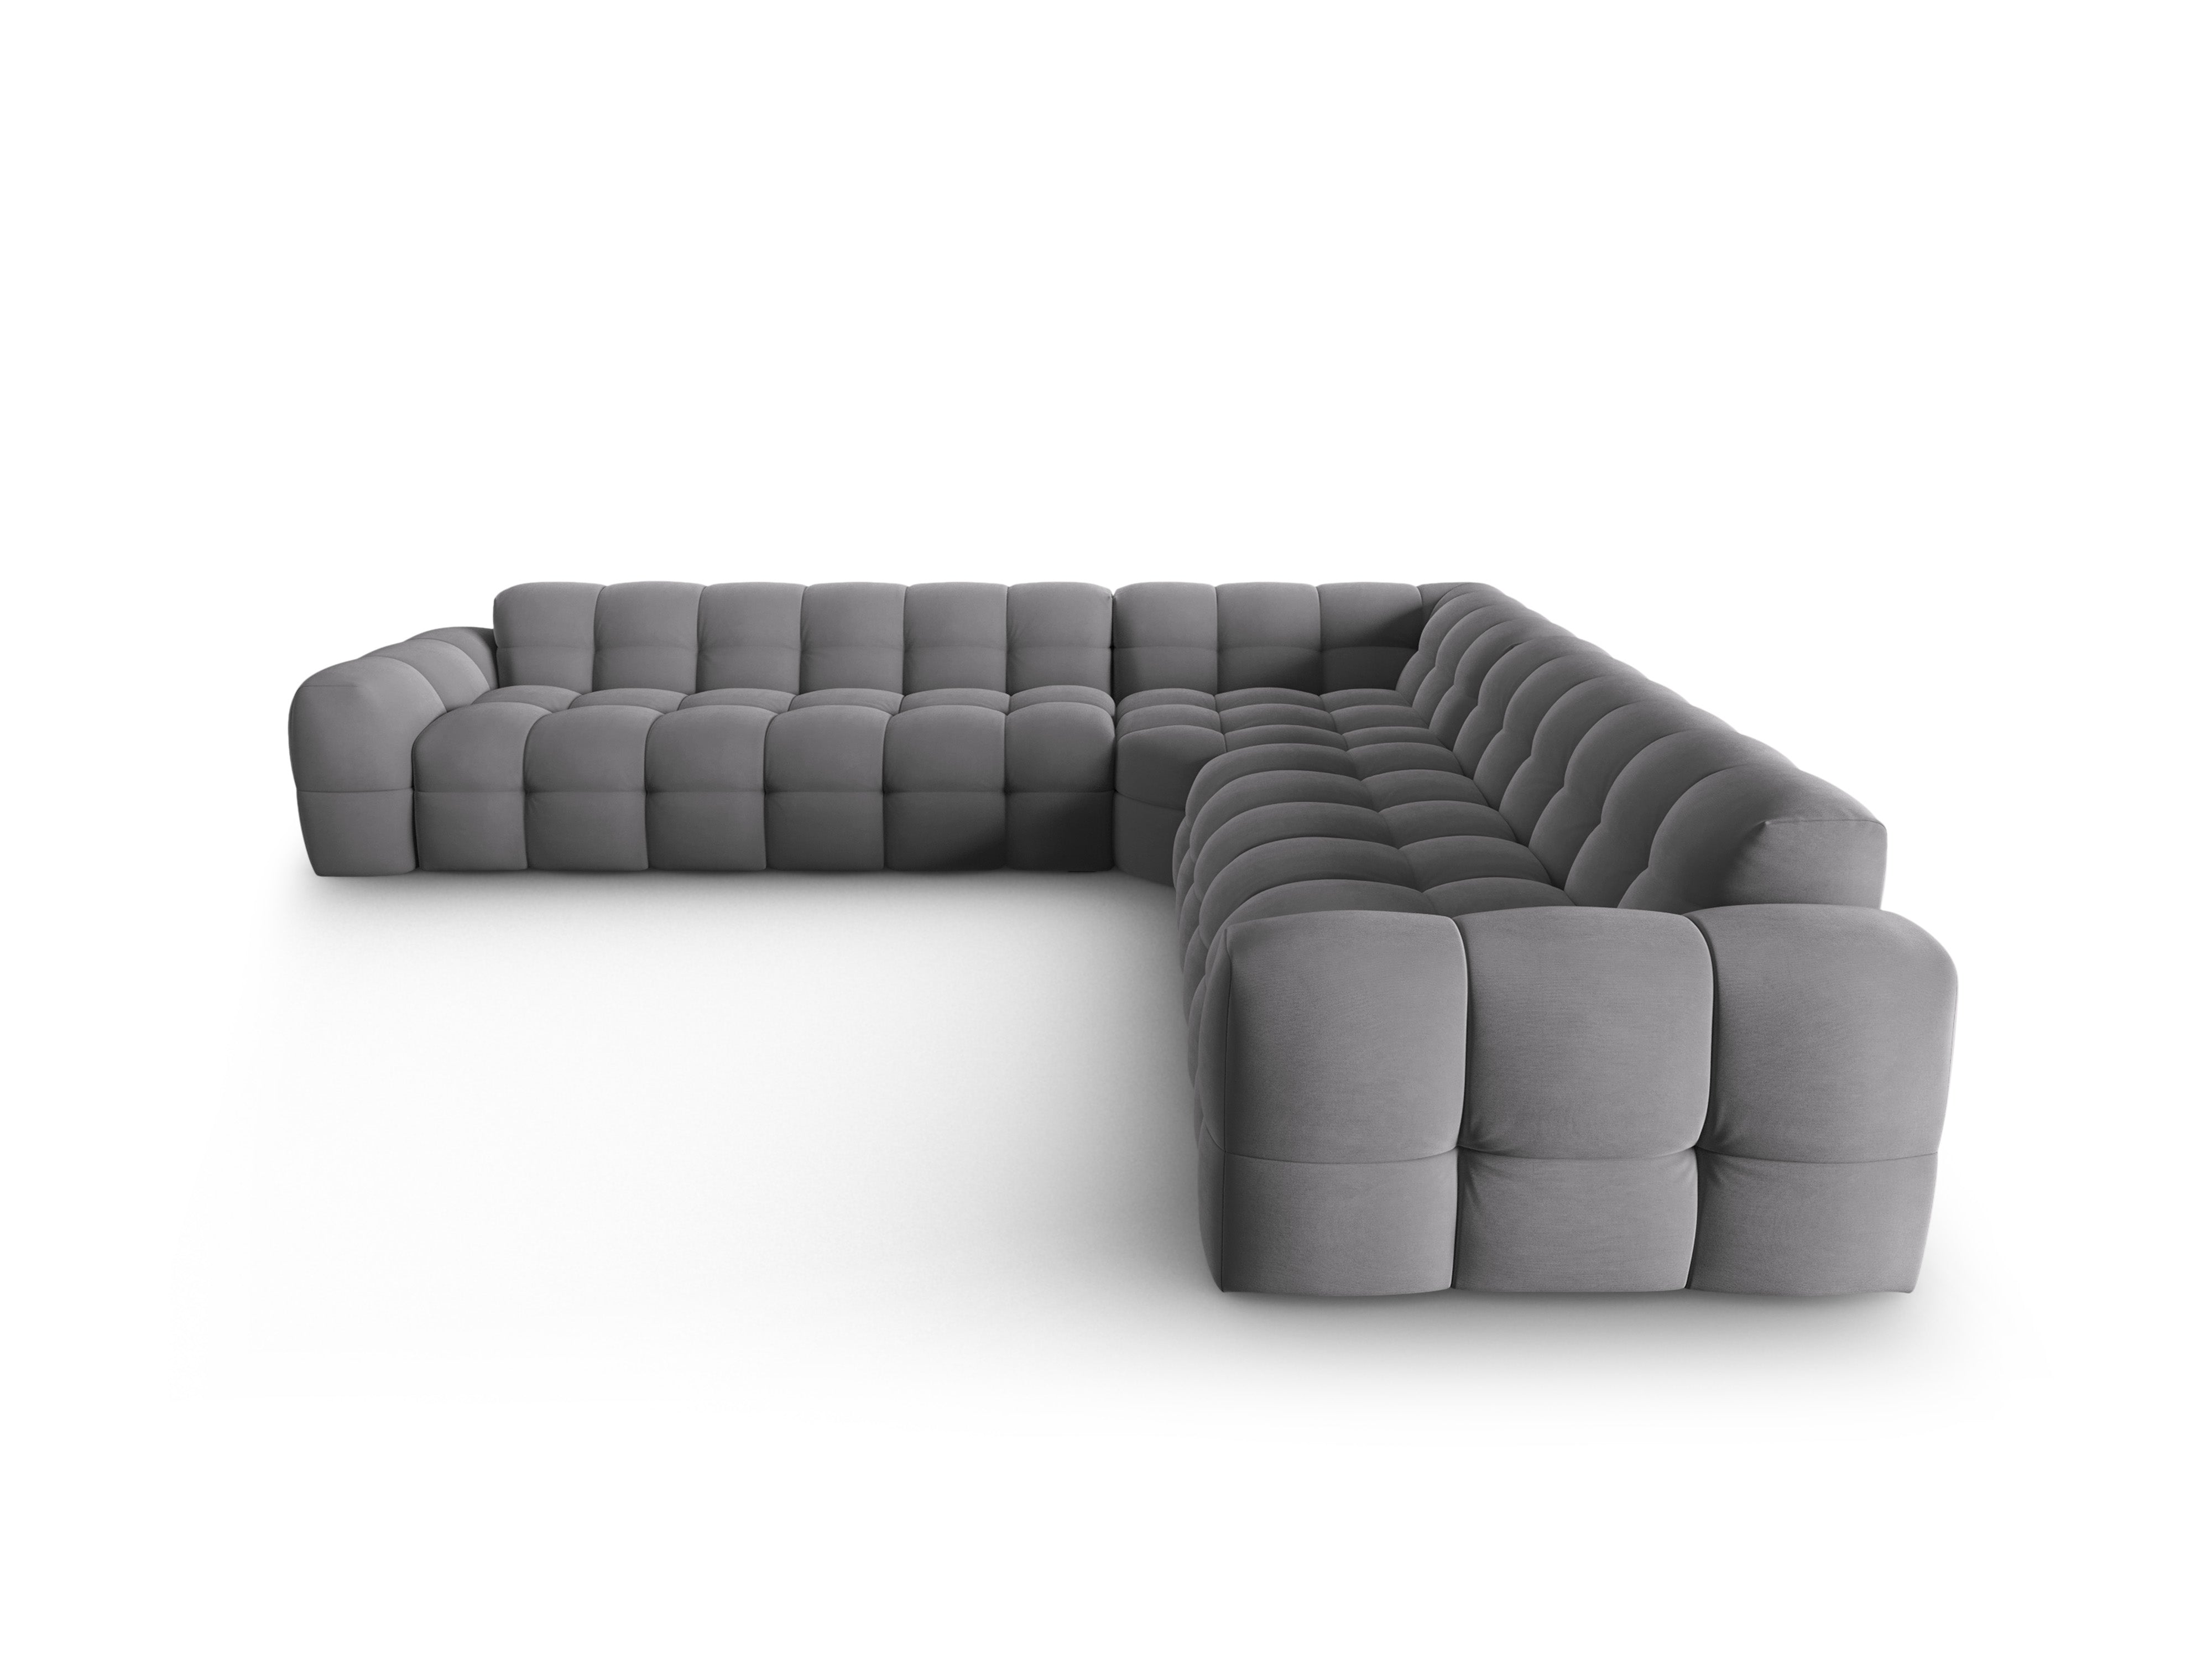 Velvet Symmetrical Corner Sofa, "Nino", 7 Seats, 322x322x68
Made in Europe, Maison Heritage, Eye on Design